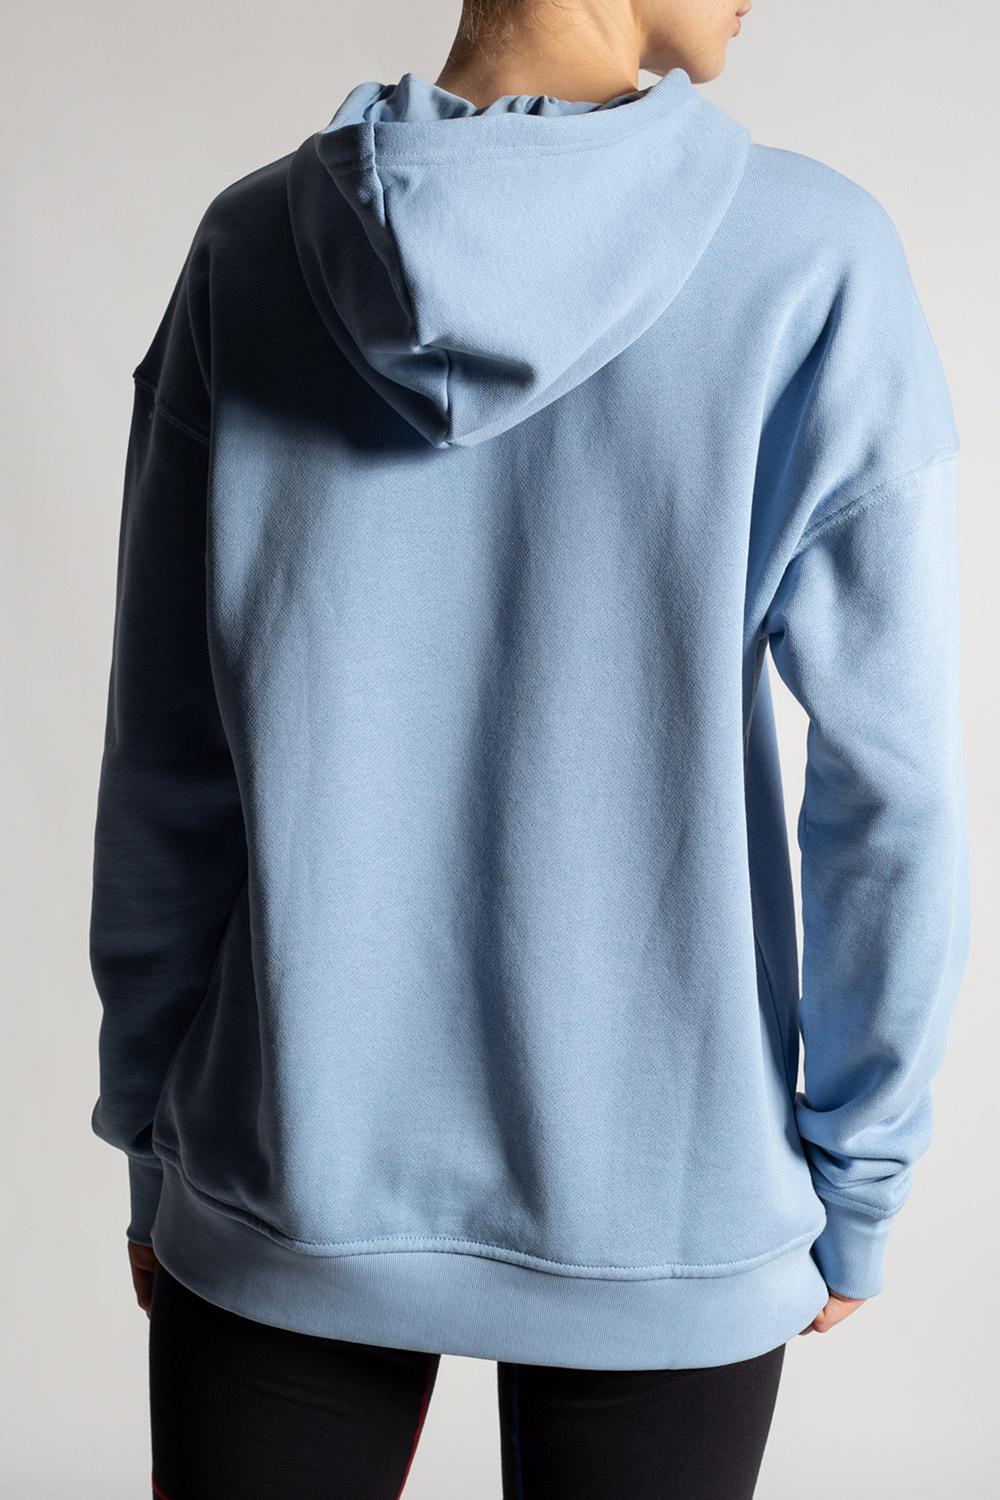 adidas Originals Cotton Logo Hoodie in Light Blue (Blue) - Lyst